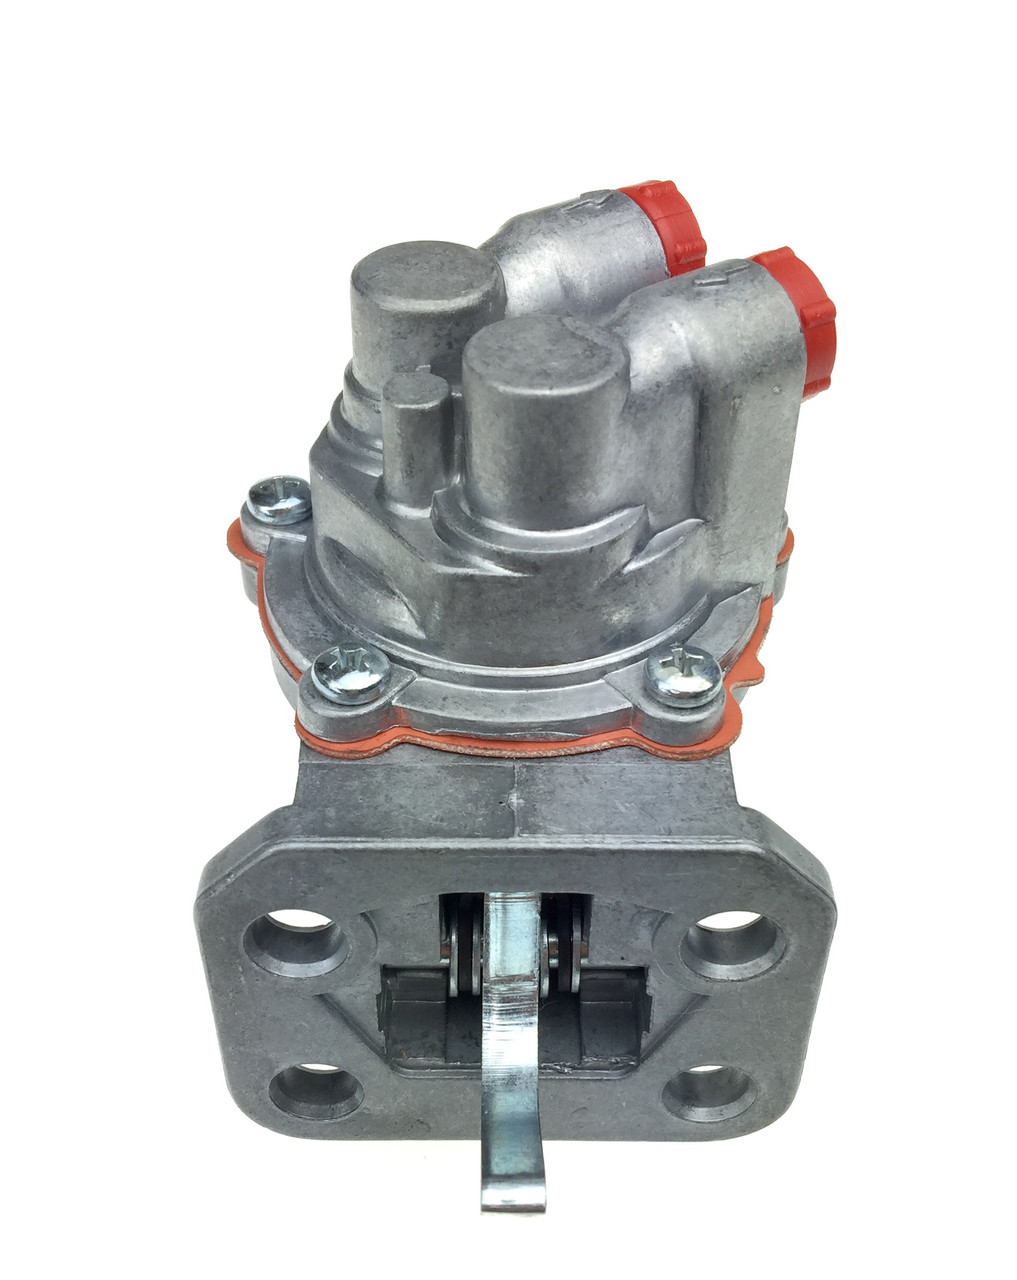 Fuel Lift Transfer Pump for Perkins 3-Cylinder AD3.152 3.1524 903-27 903-27T 